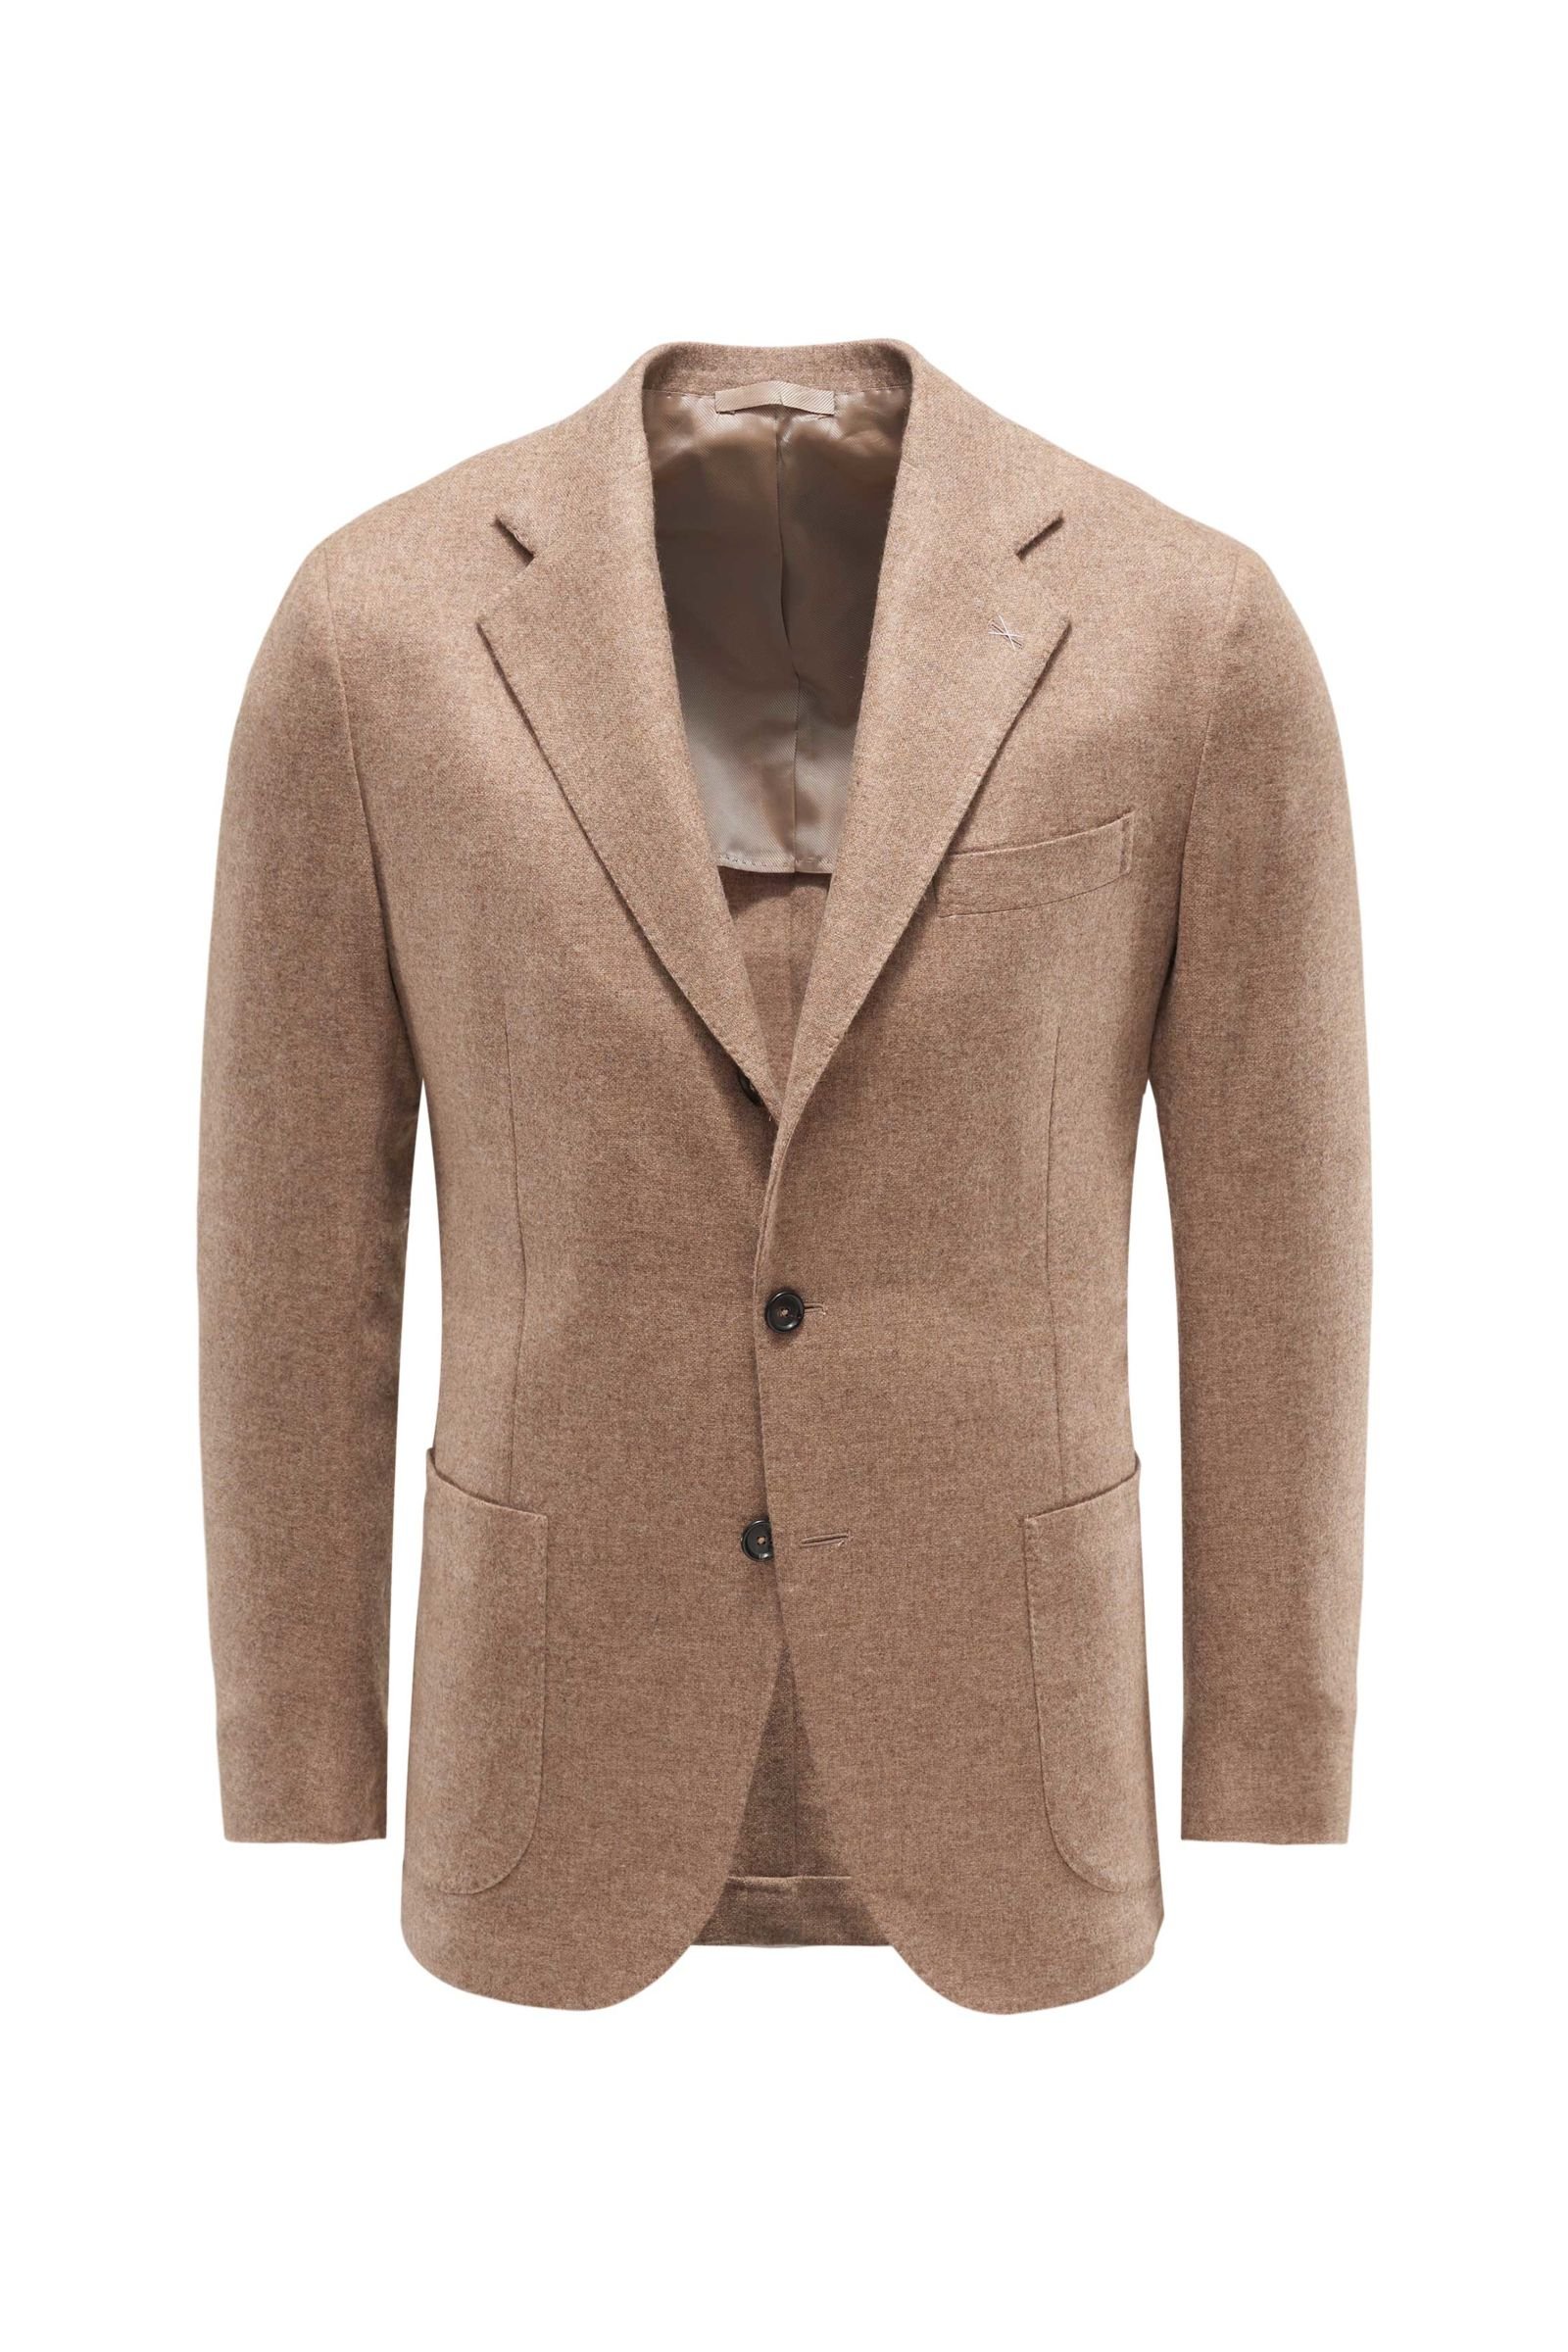 Cashmere smart-casual jacket 'Posillipo' light brown